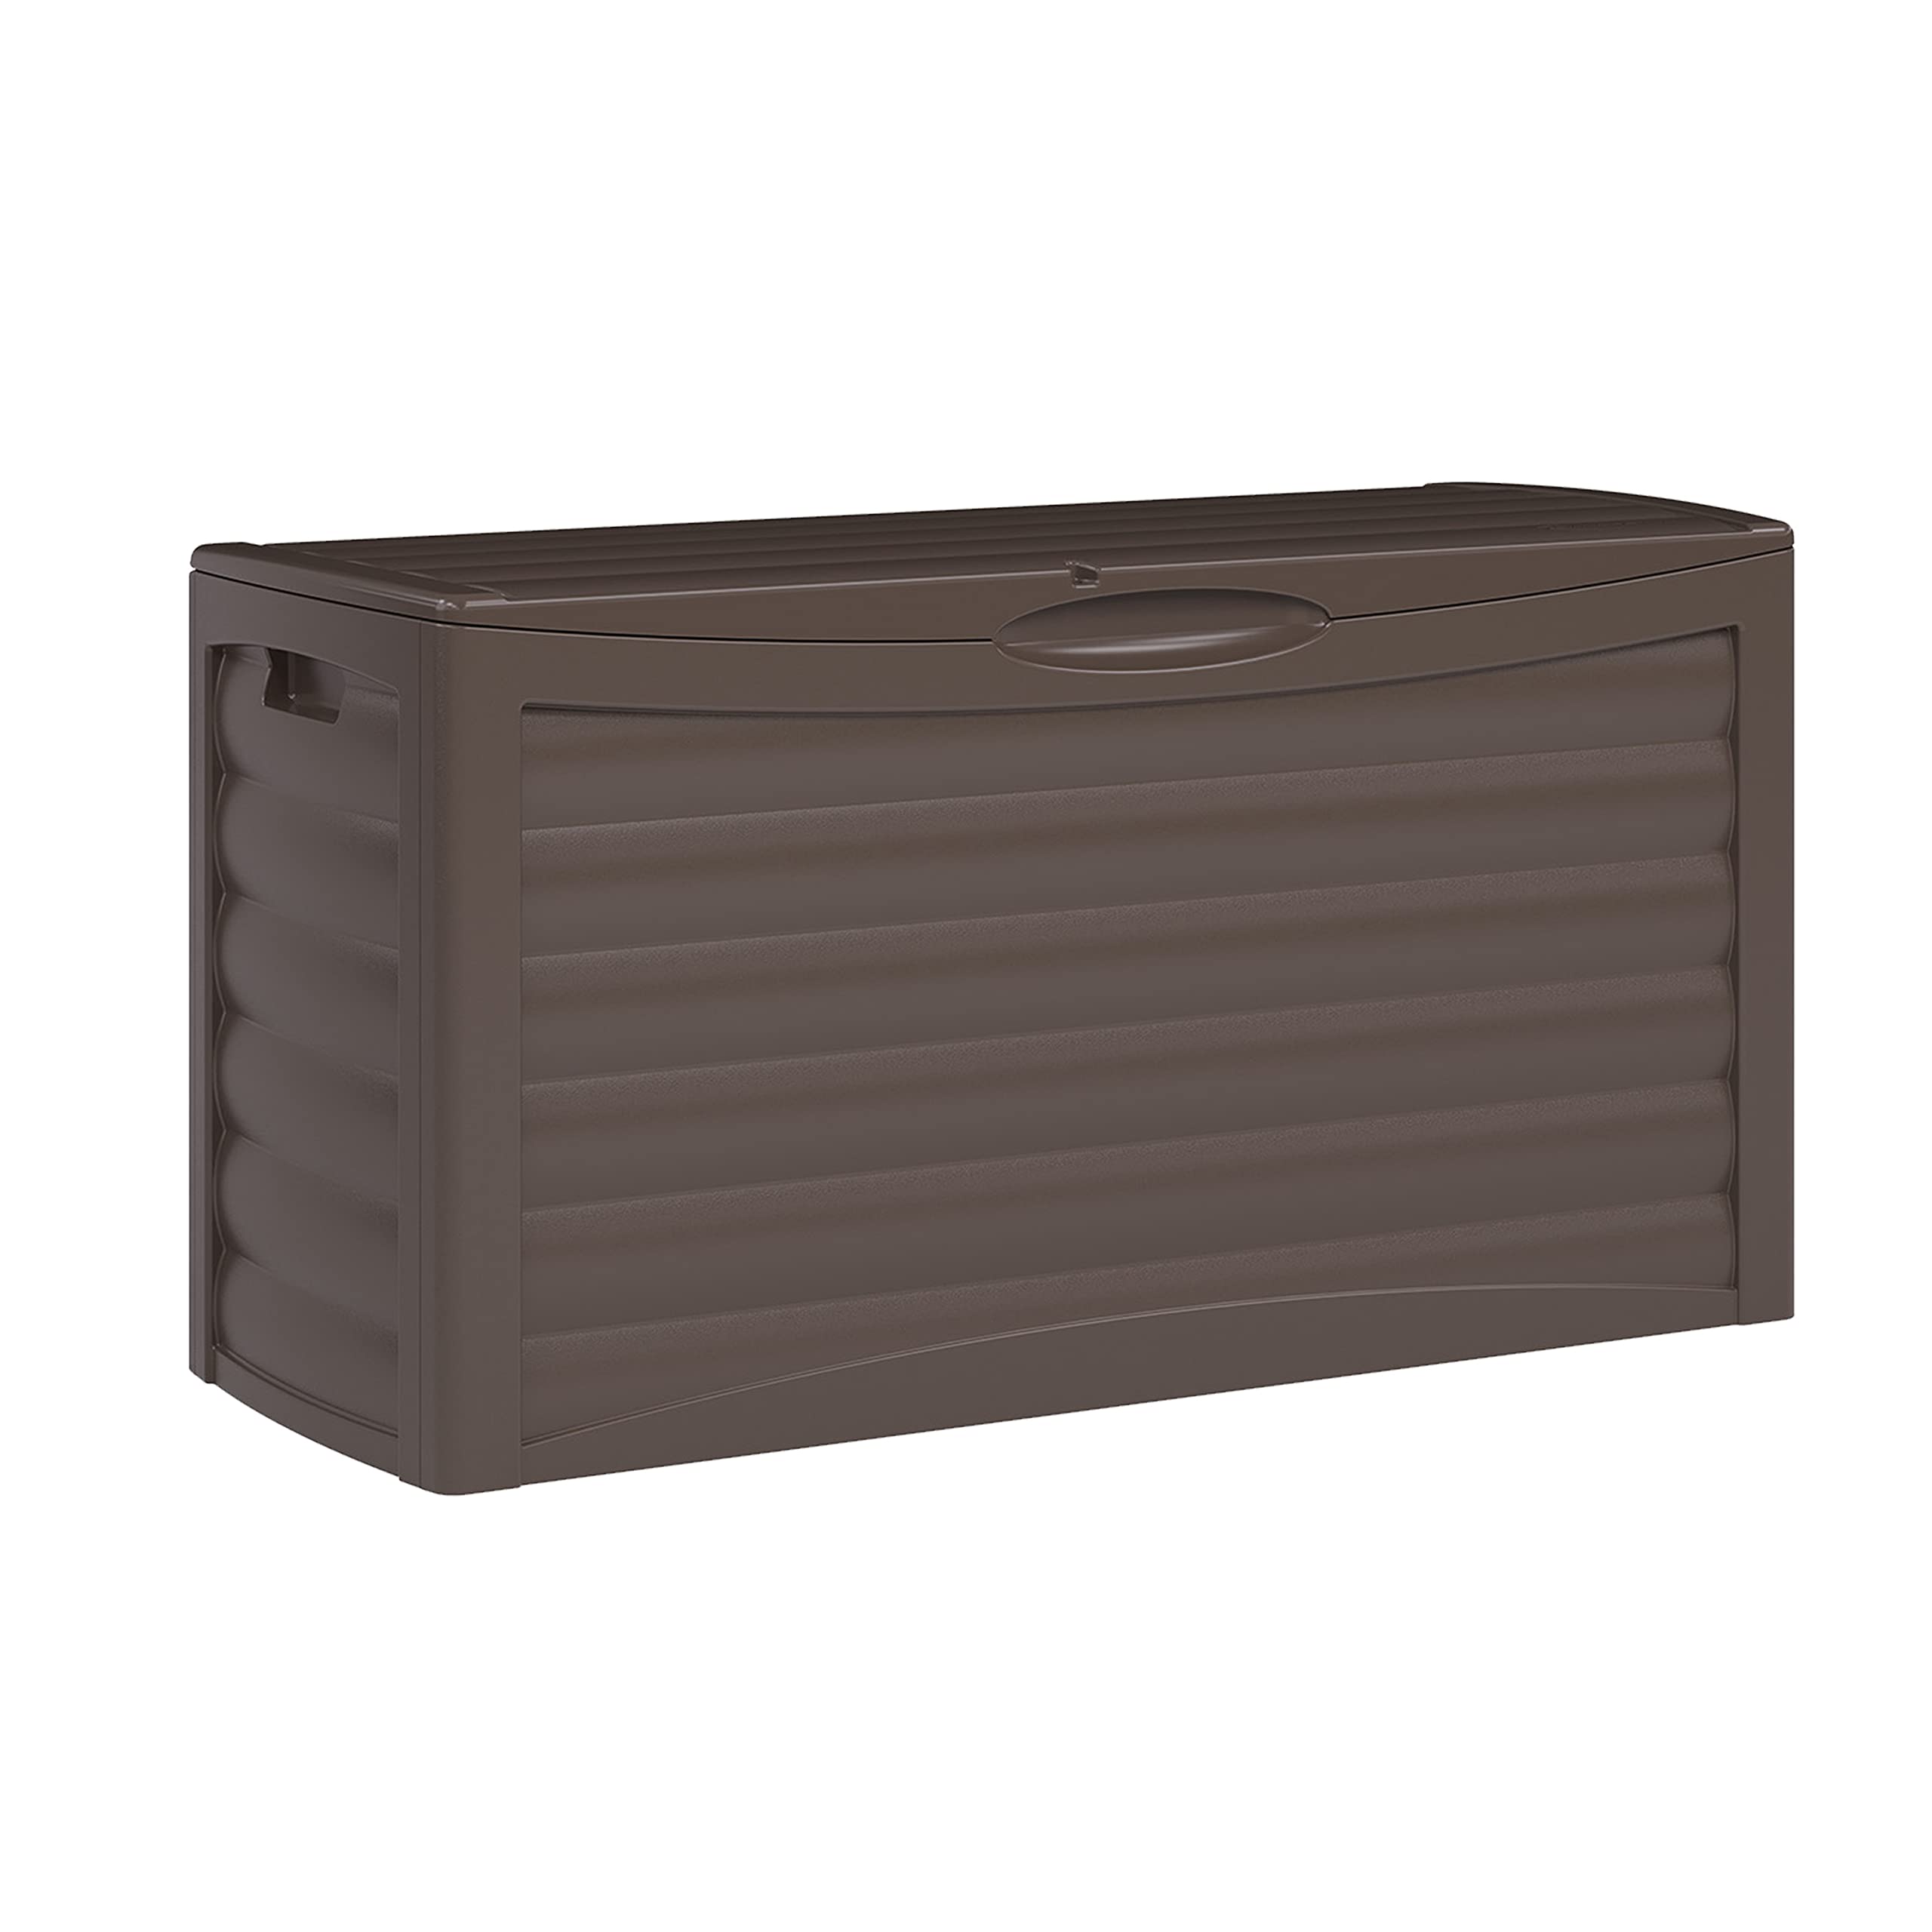 63-Gallon Suncast Resin Outdoor Patio Storage Box (Brown) $79 + Free Shipping on Amazon